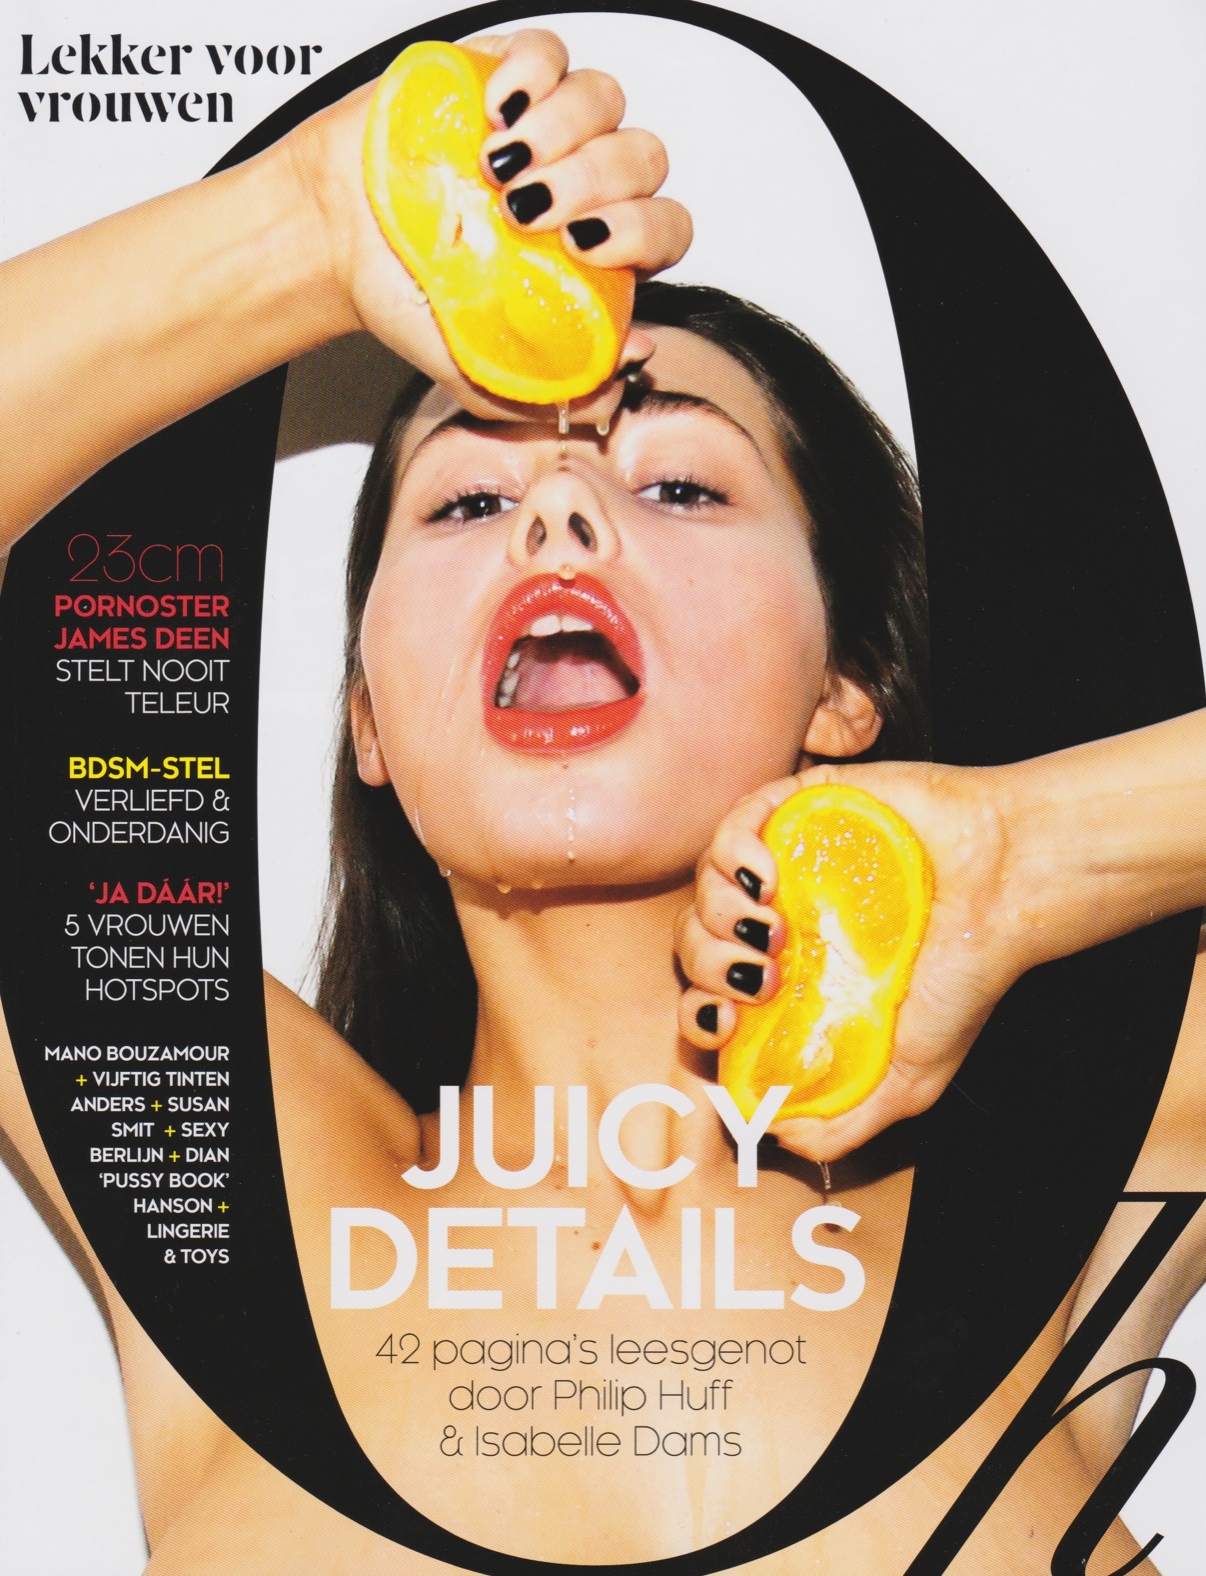 Oh magazine premiere issue 2015